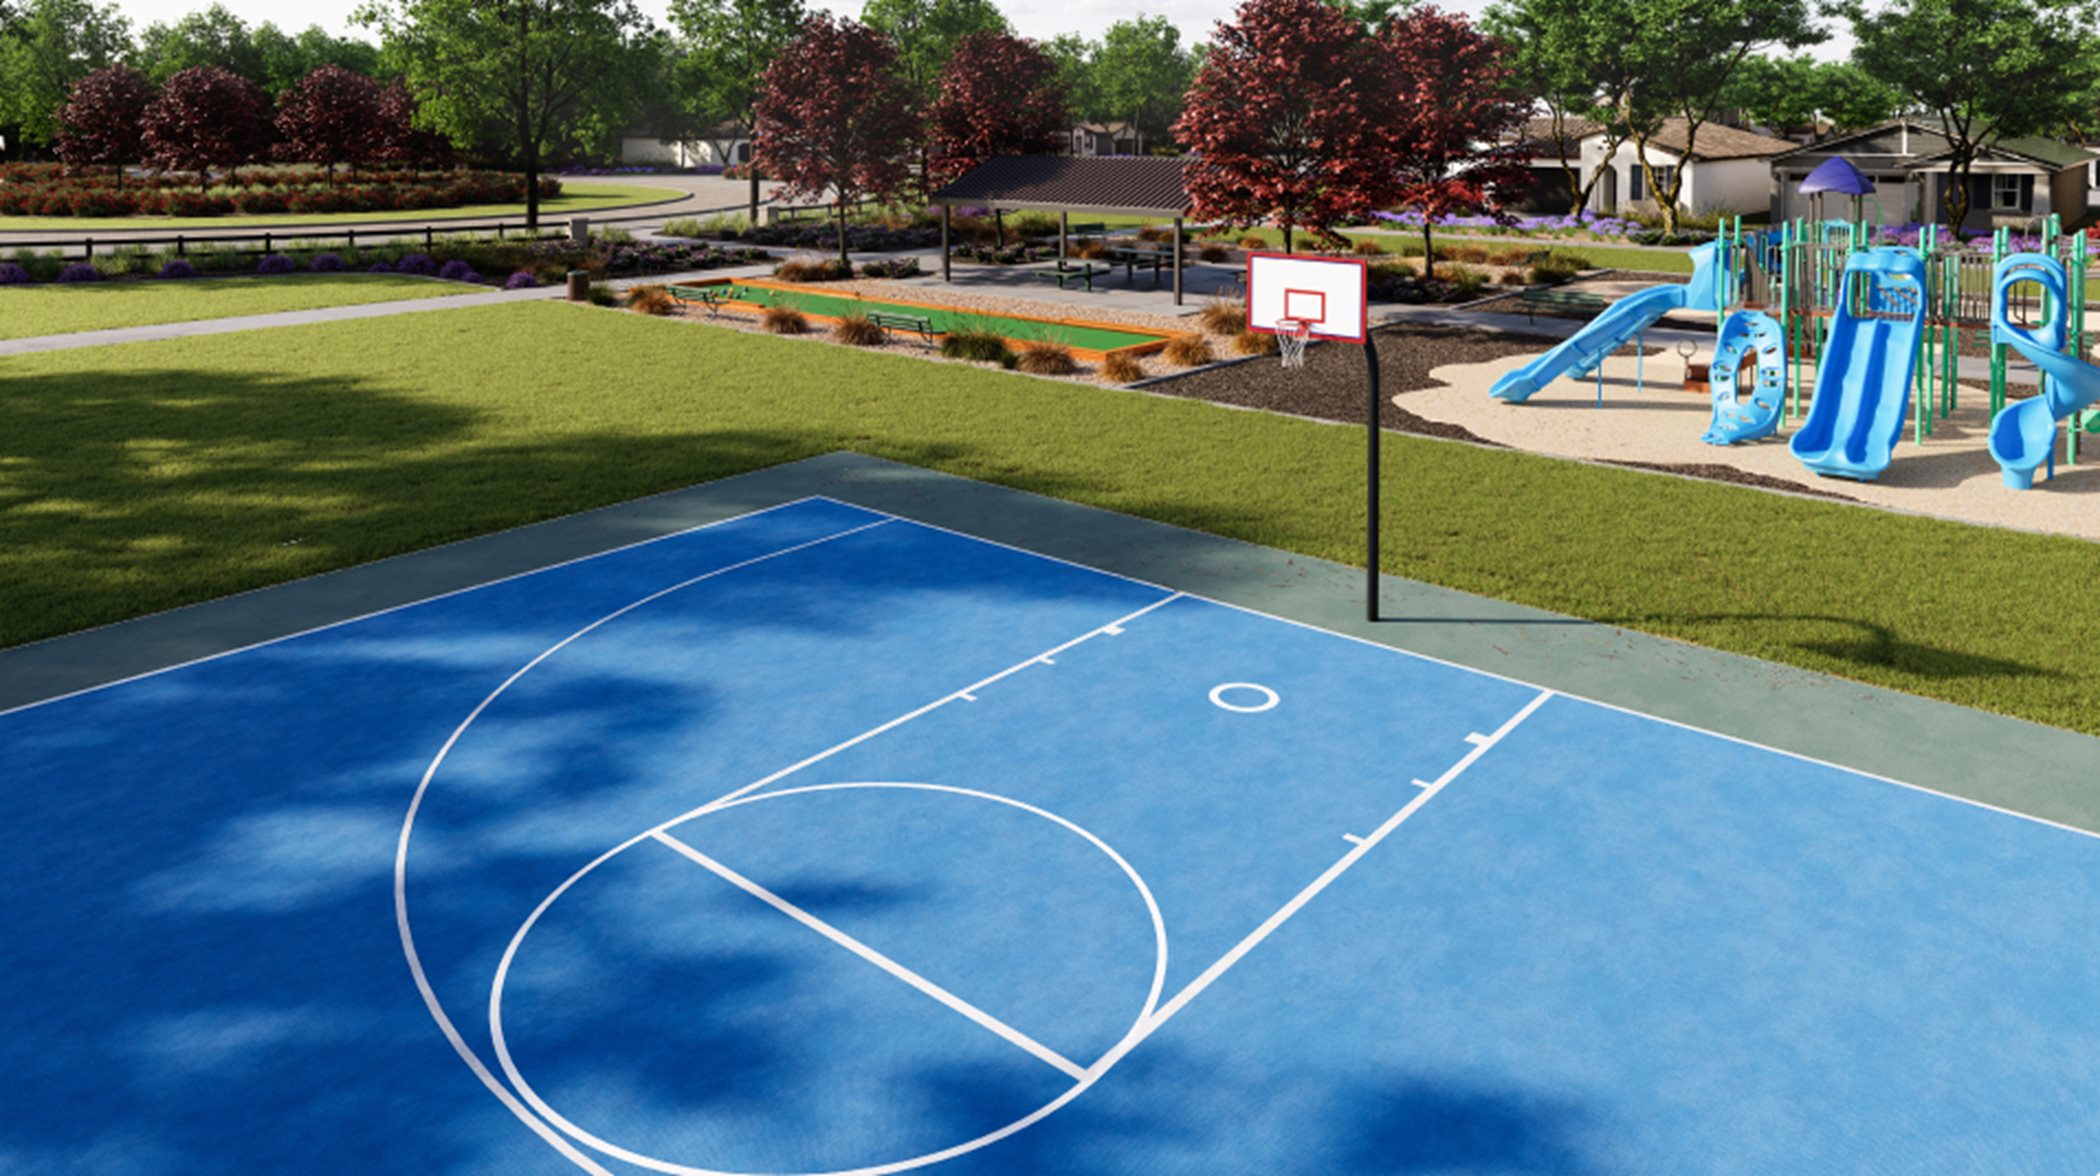 Blue basketball court and net